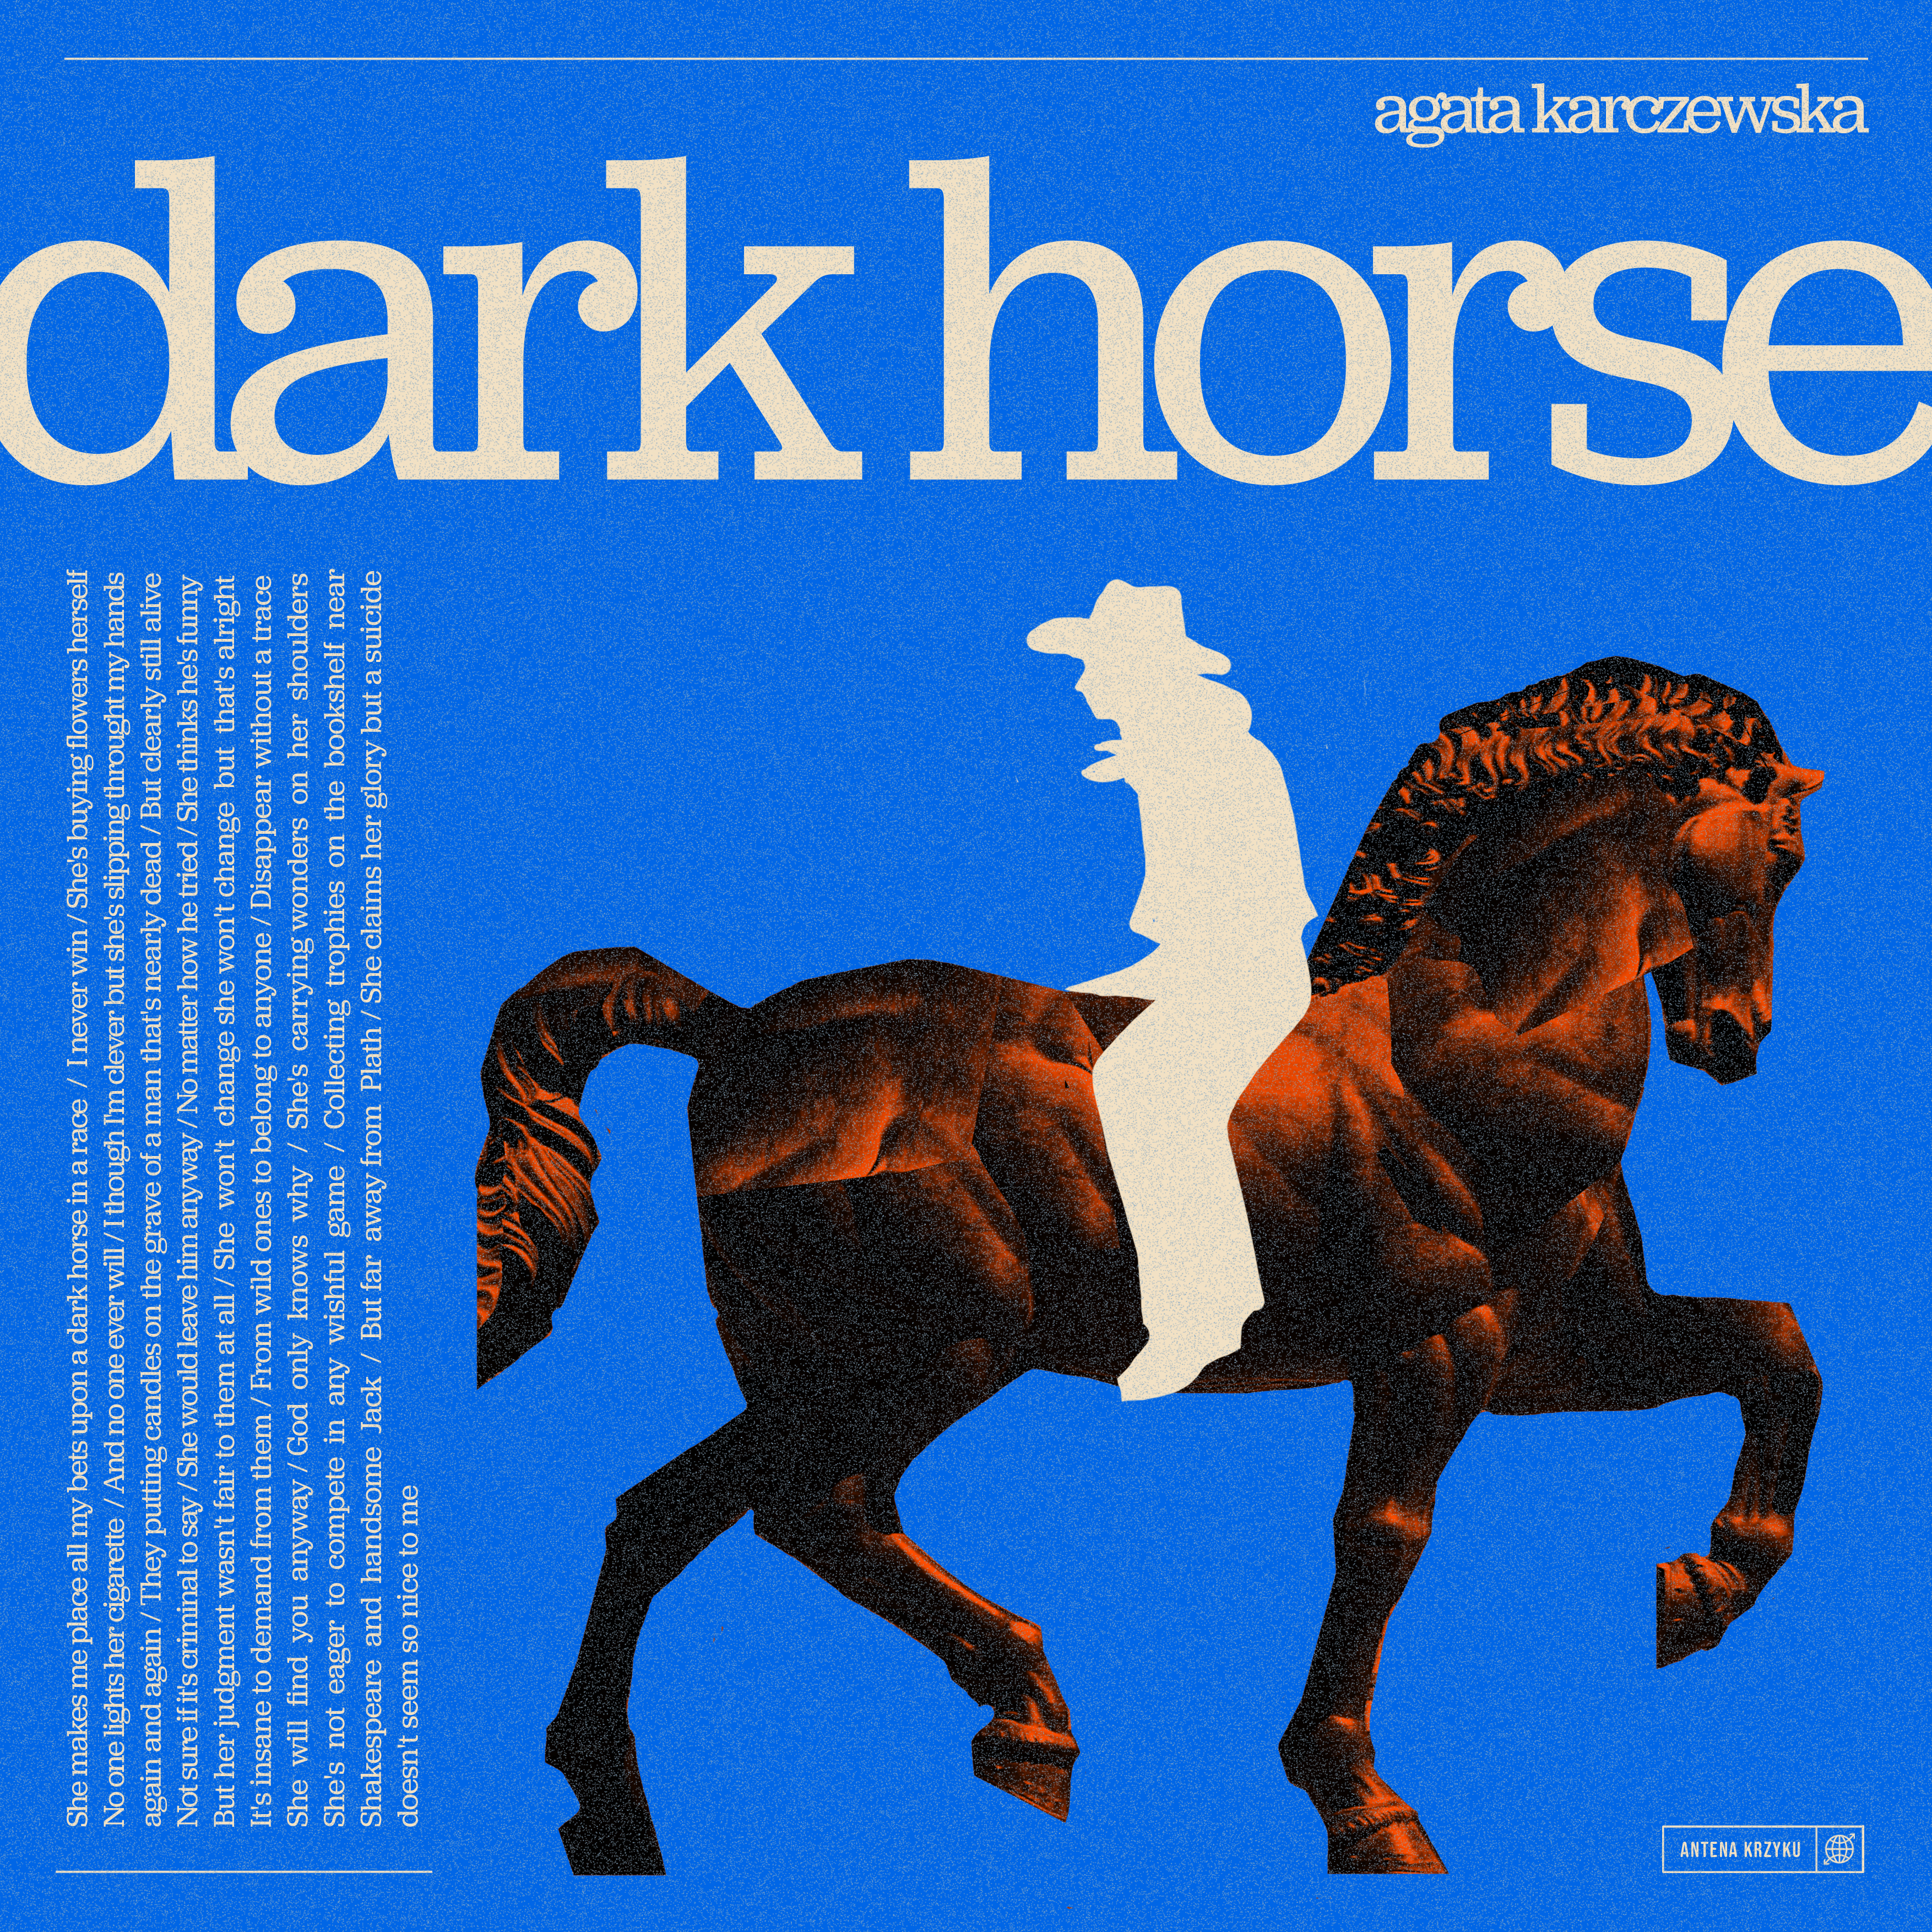 NEW MUSIC: Agata Karczewska – Dark Horse